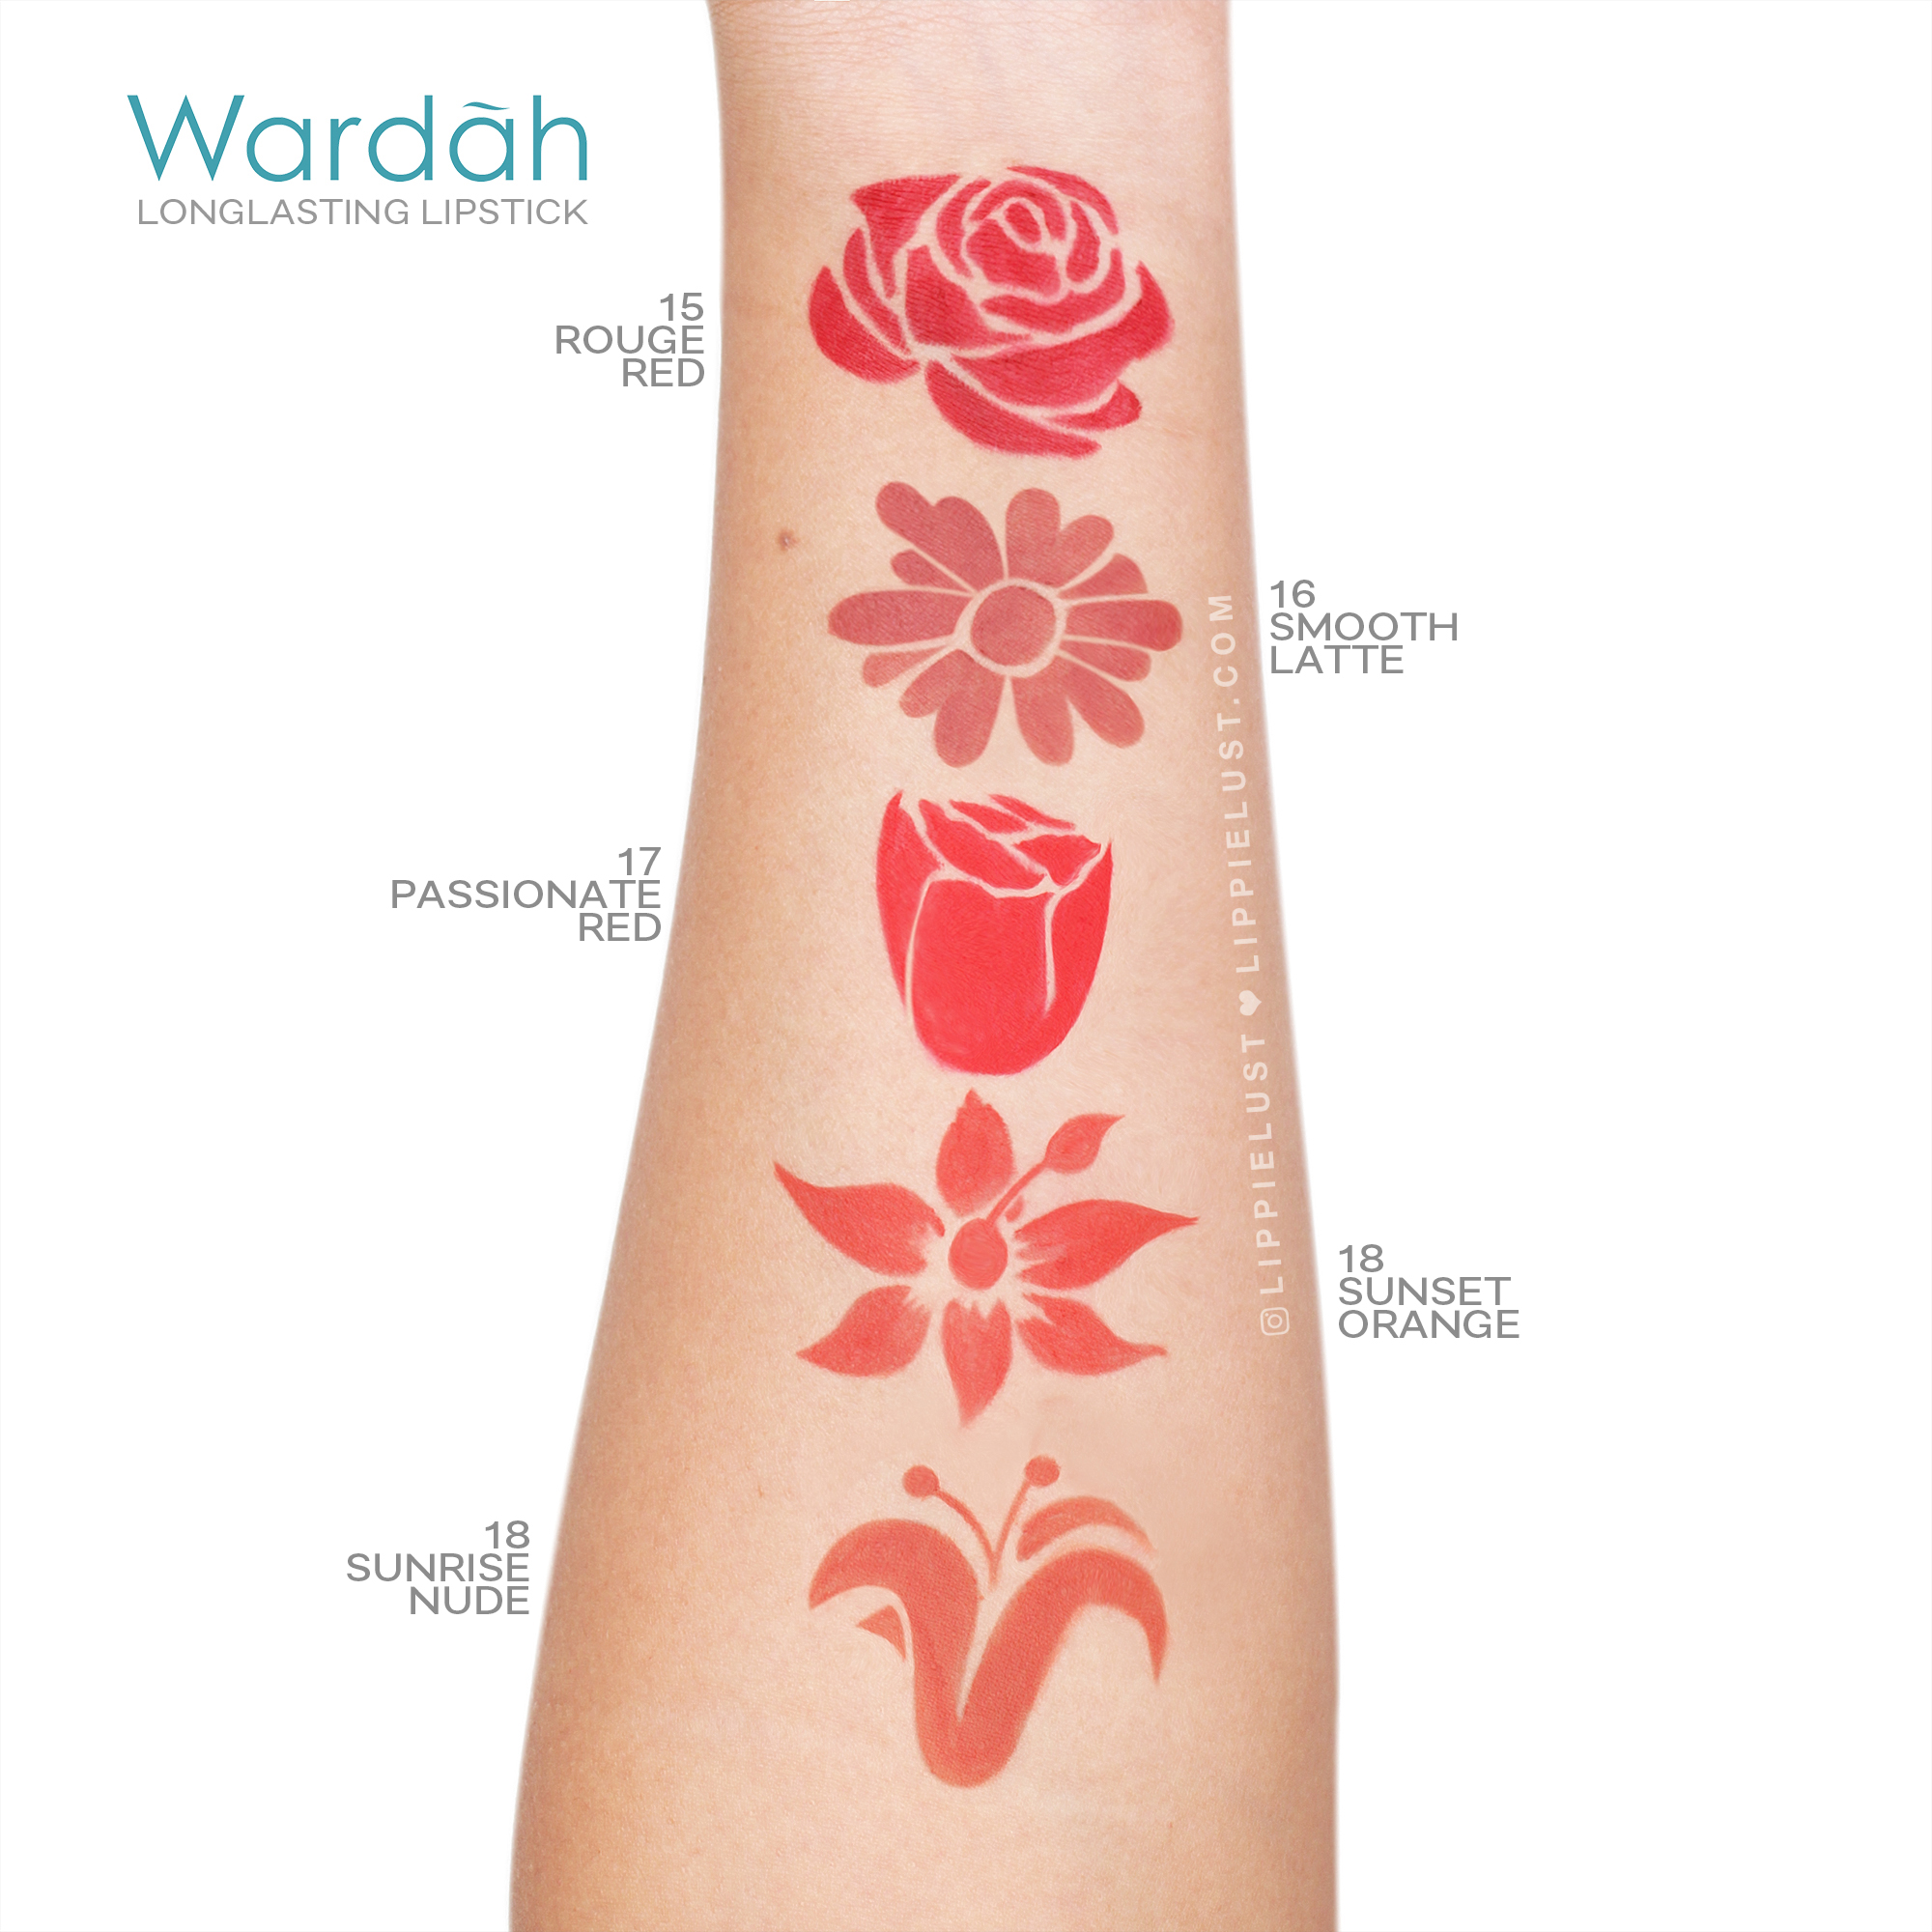 [SWATCH & REVIEW] Wardah Beauty Long Lasting Lipstick